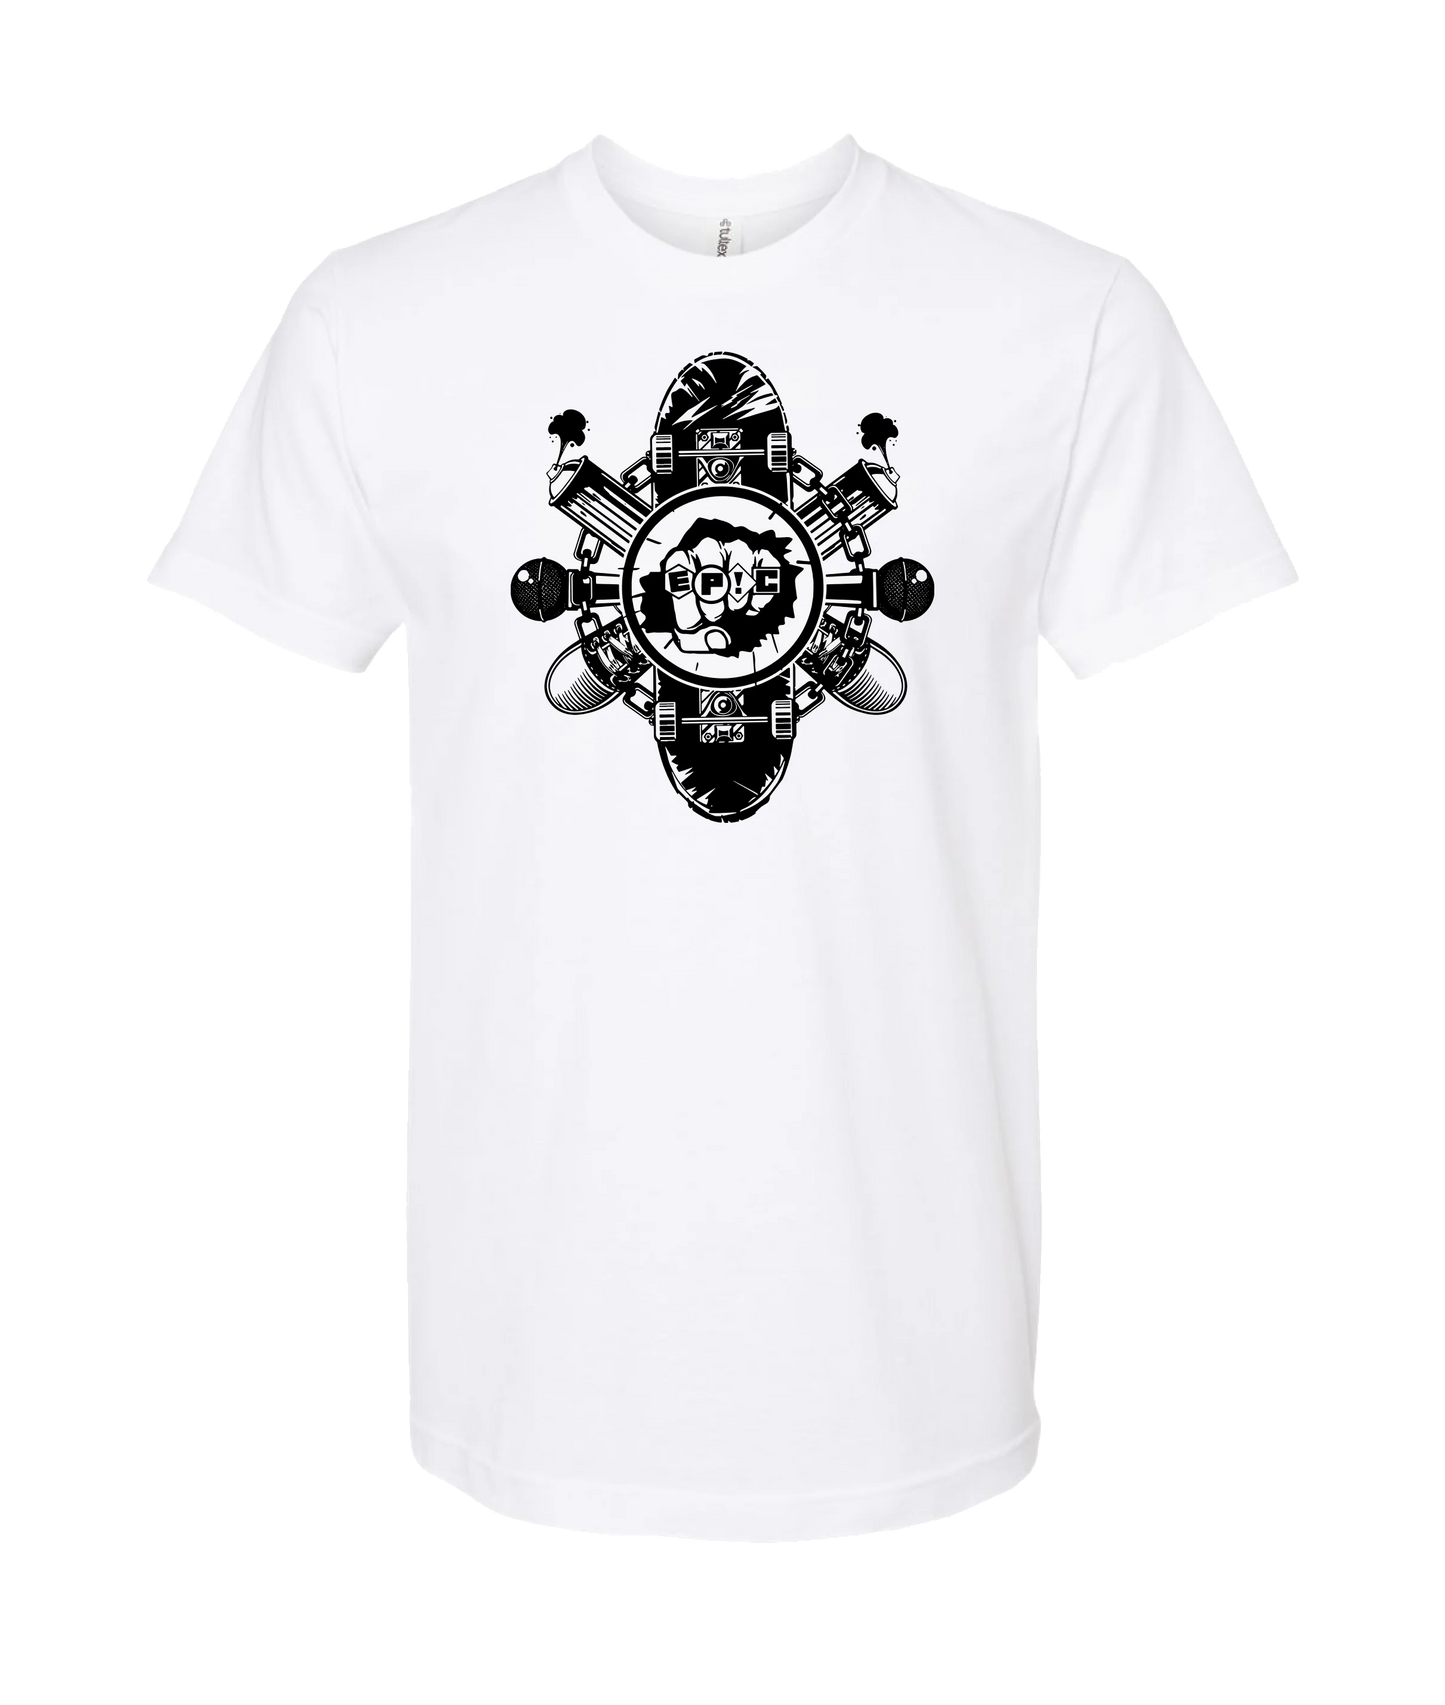 Ep!c of PovCiti - Epic Punch - White T-Shirt